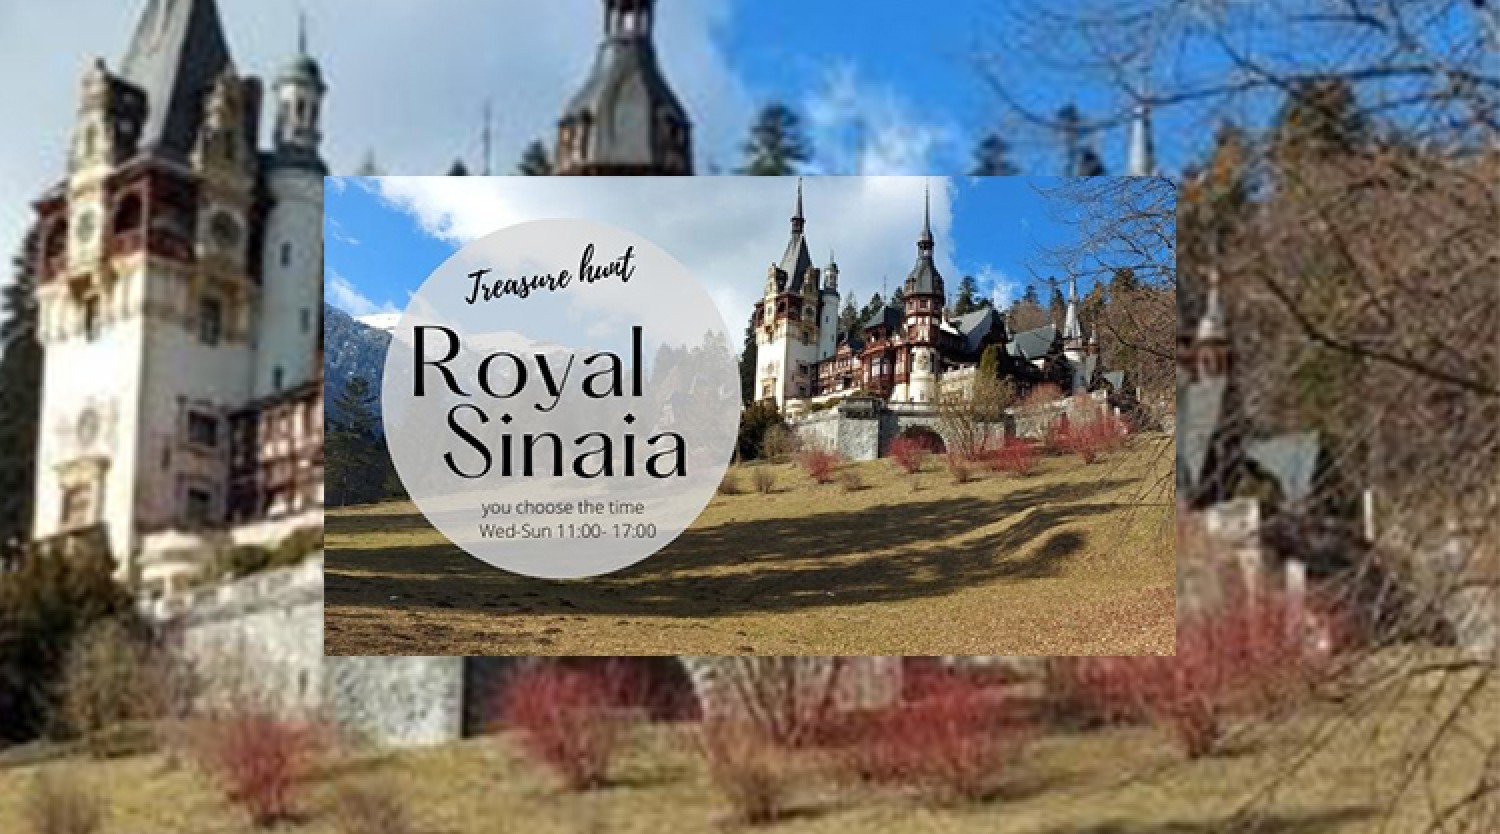 Royal Sinaia treasure hunt